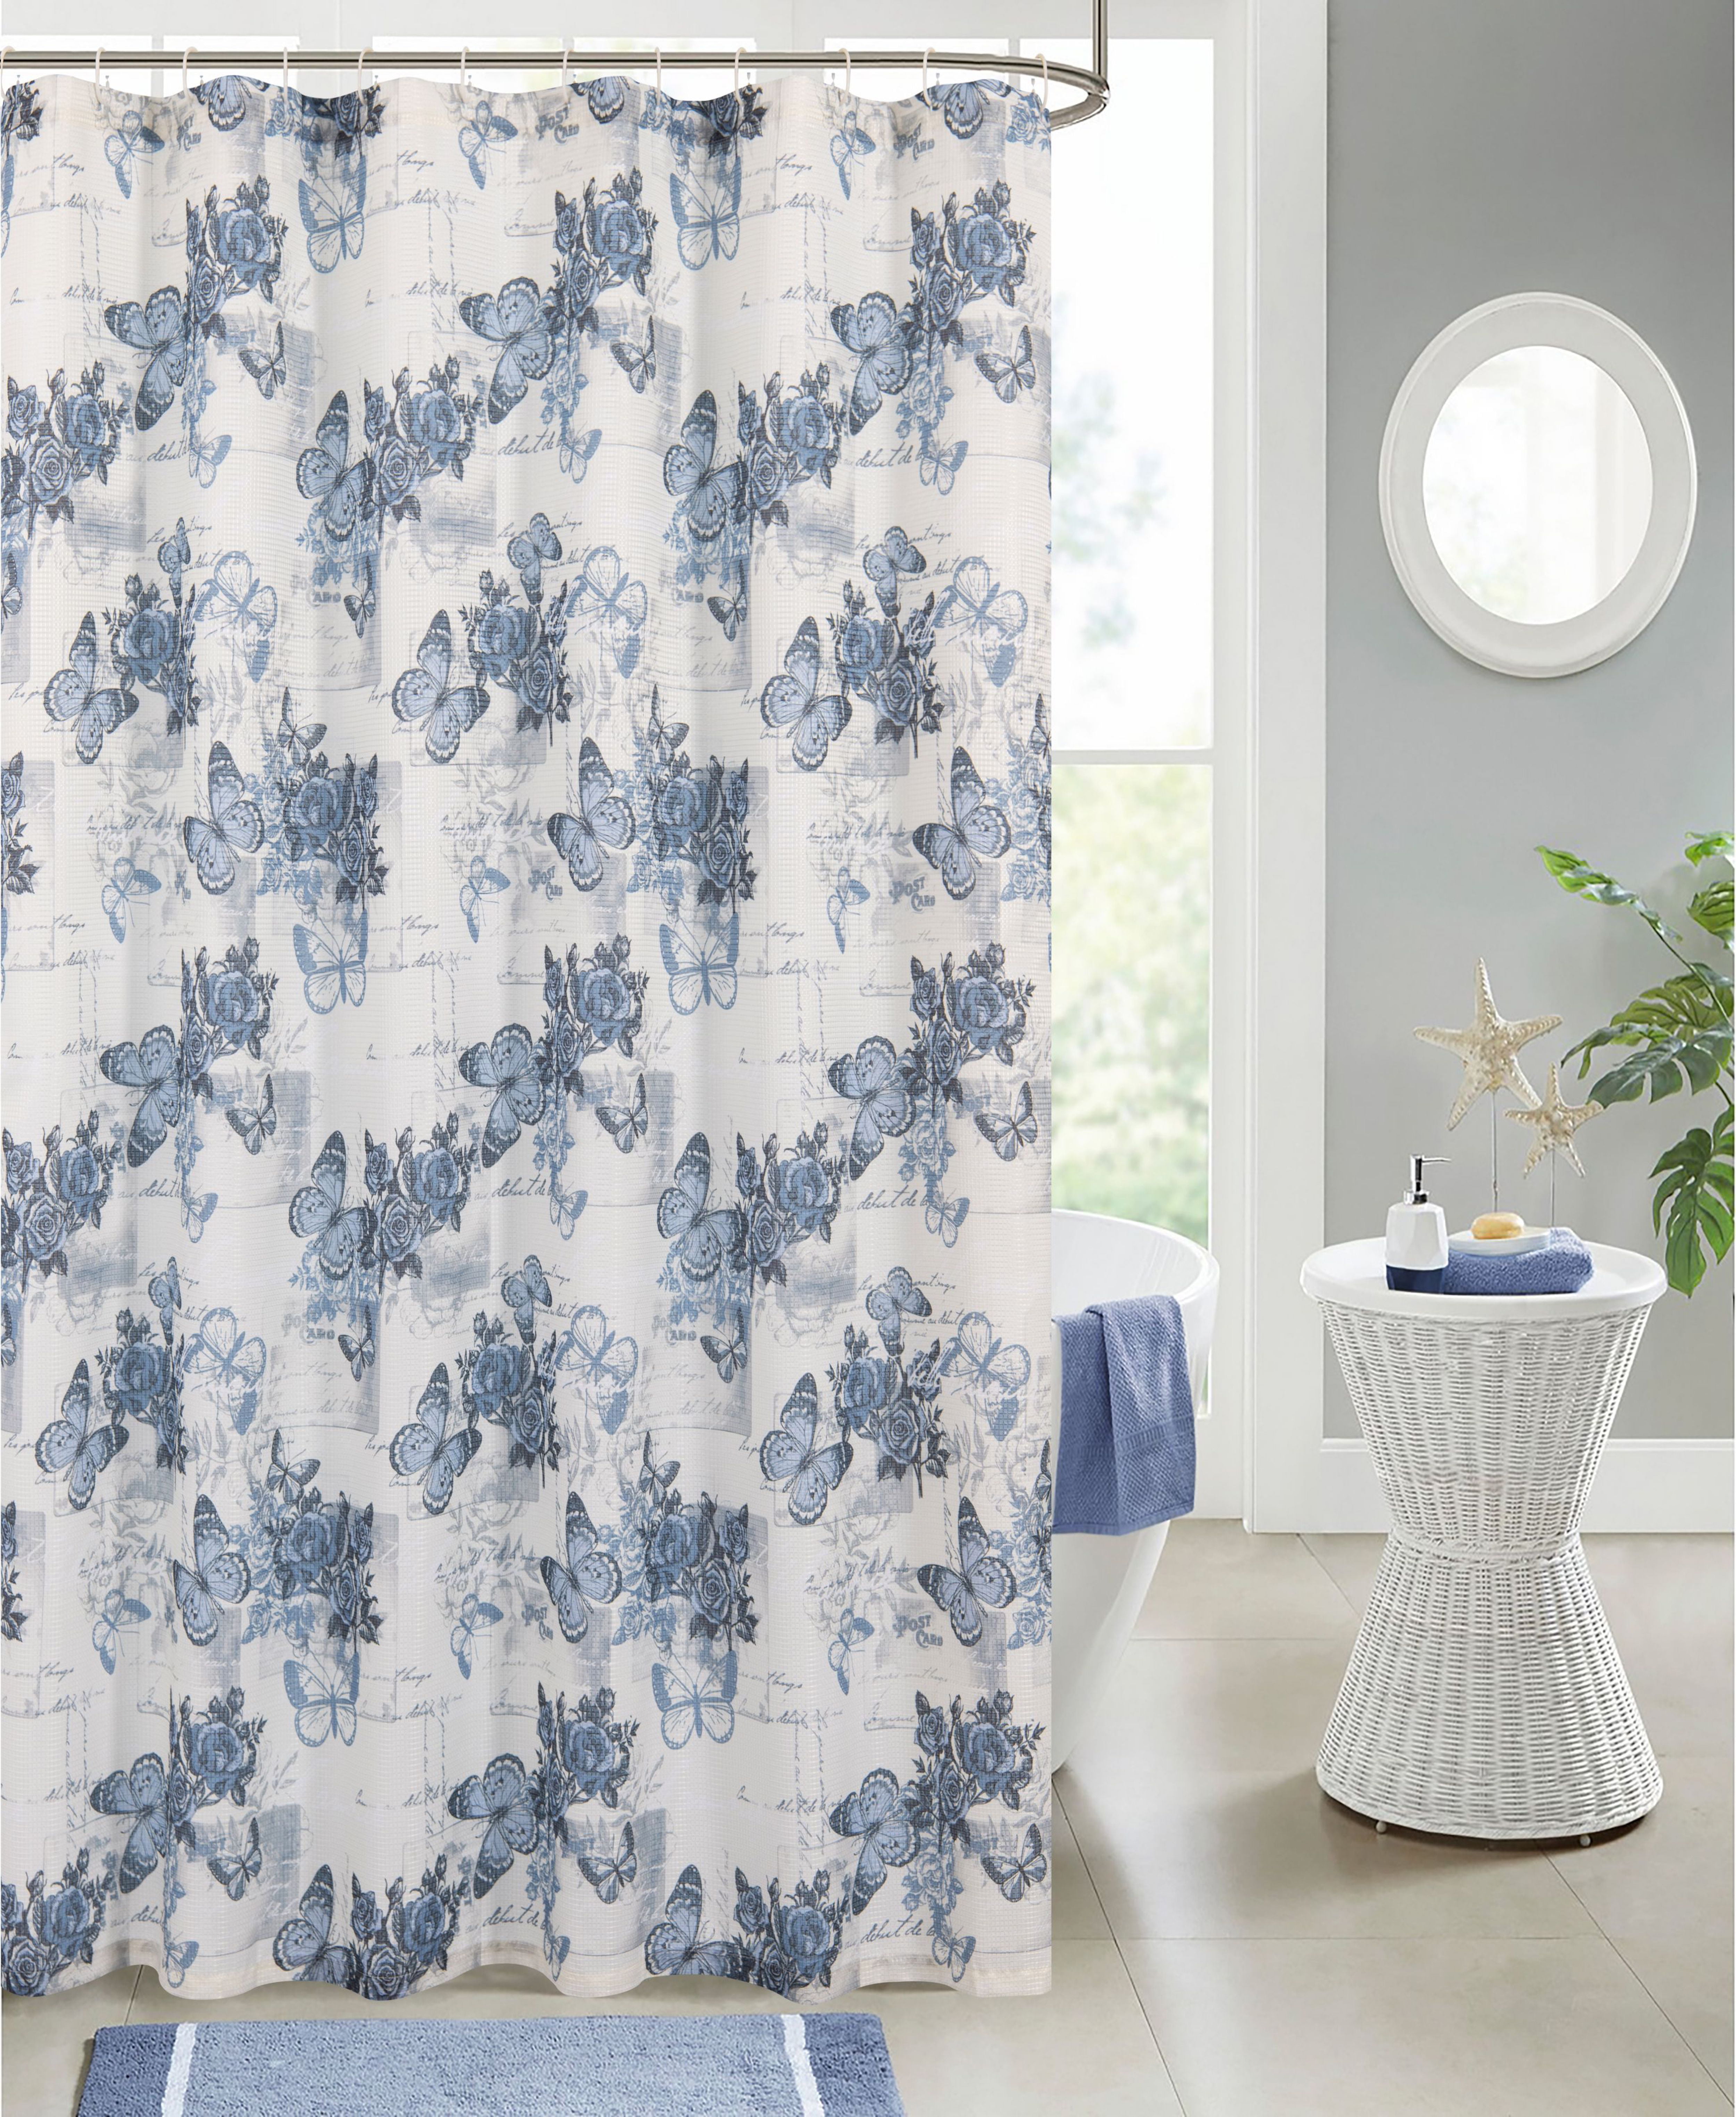 Colorful Butterfly Waterproof Fabric Shower Curtain Liner w/ Hooks Bath Mat Set 